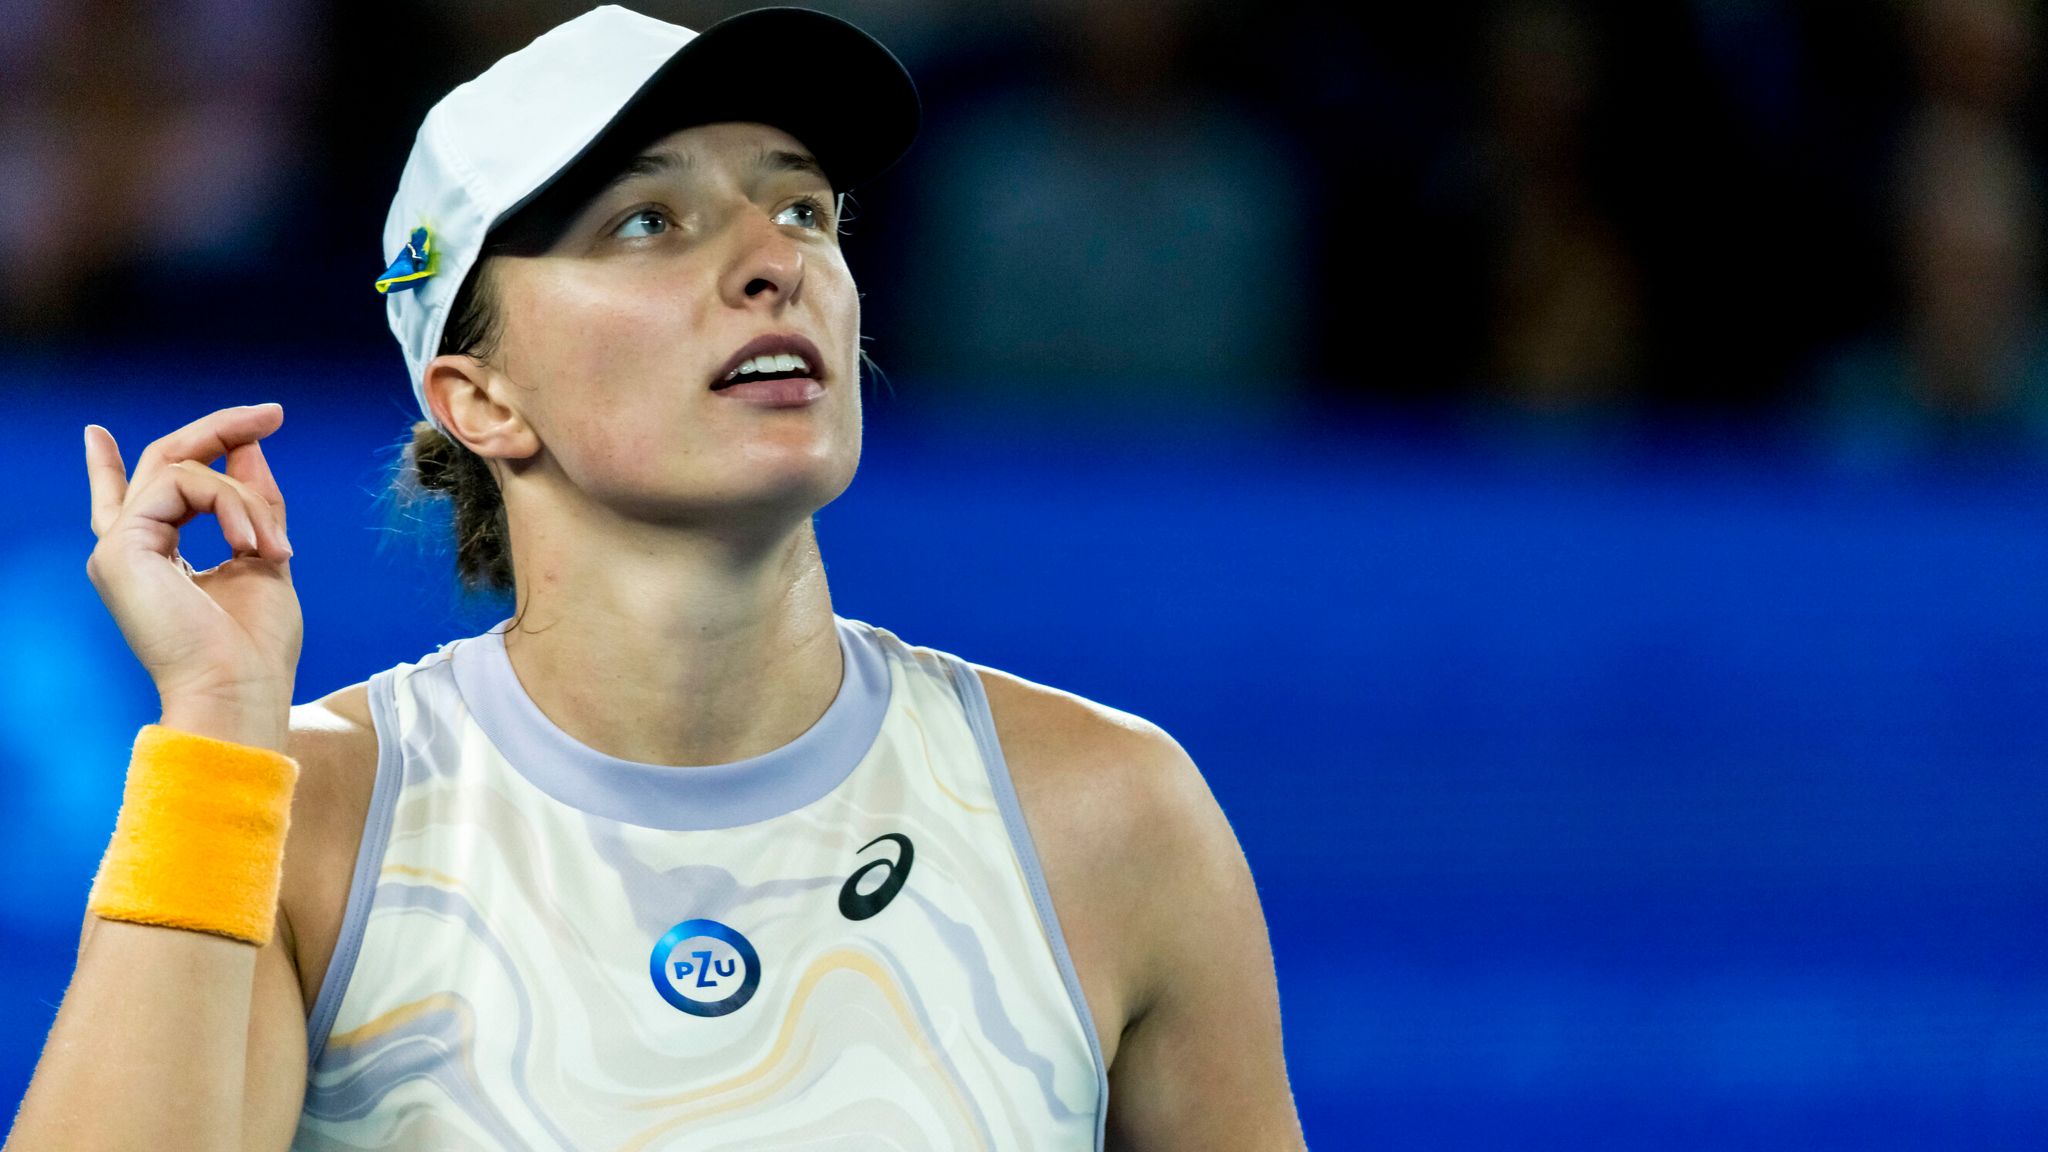 Dubai Open Highlights: Iga Swiatek sails past Liudmila Samsonova in Dubai  Open 2023 - Follow LIVE